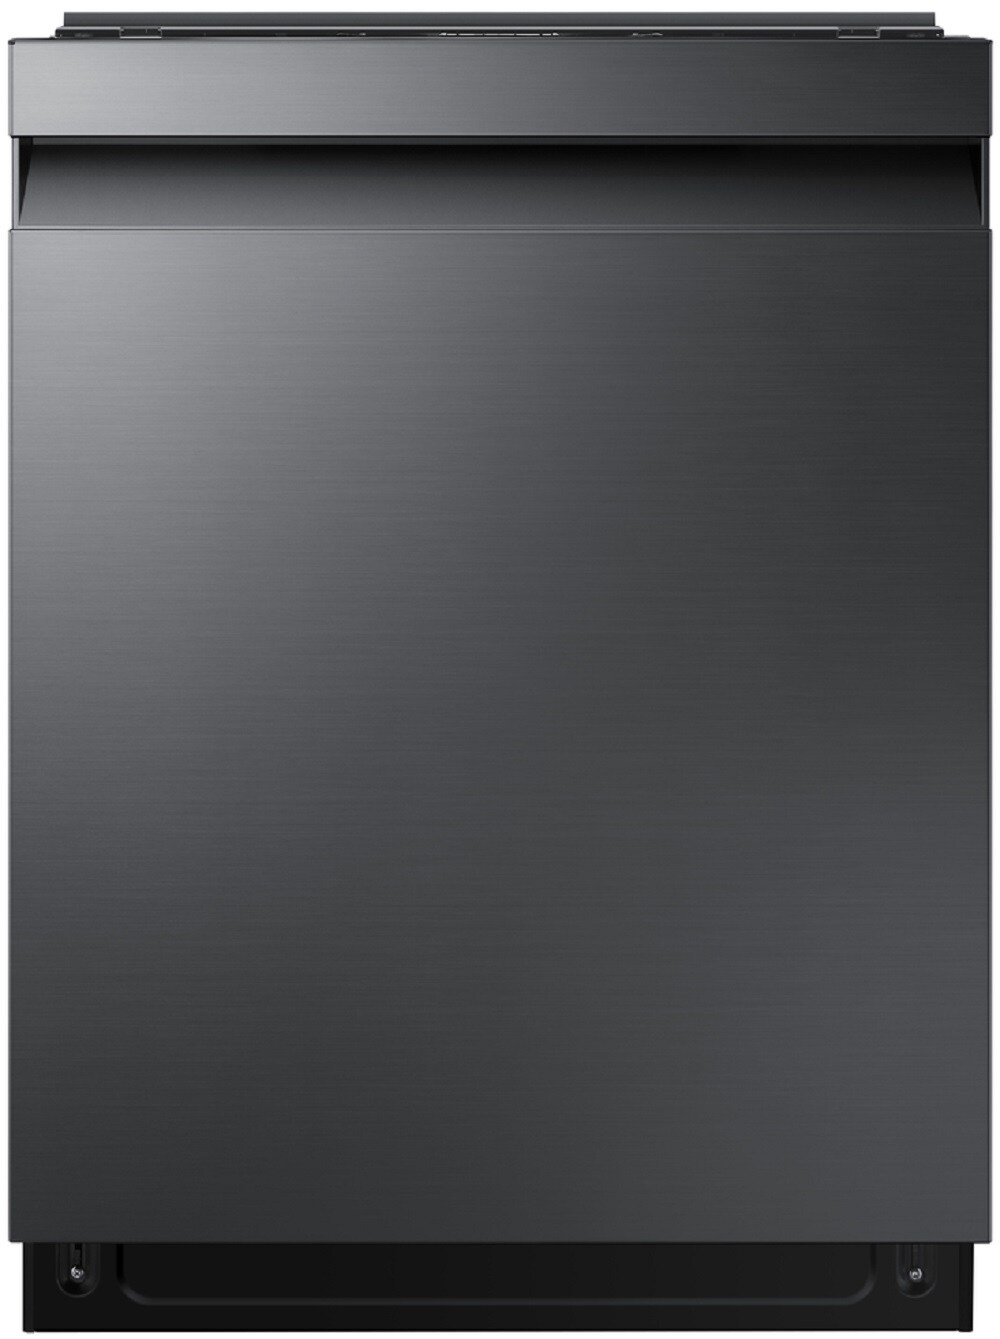 spek naam rekken Samsung StormWash 42-Decibel Top Control 24-in Built-In Dishwasher  (Fingerprint Resistant Black Stainless Steel) ENERGY STAR in the Built-In  Dishwashers department at Lowes.com